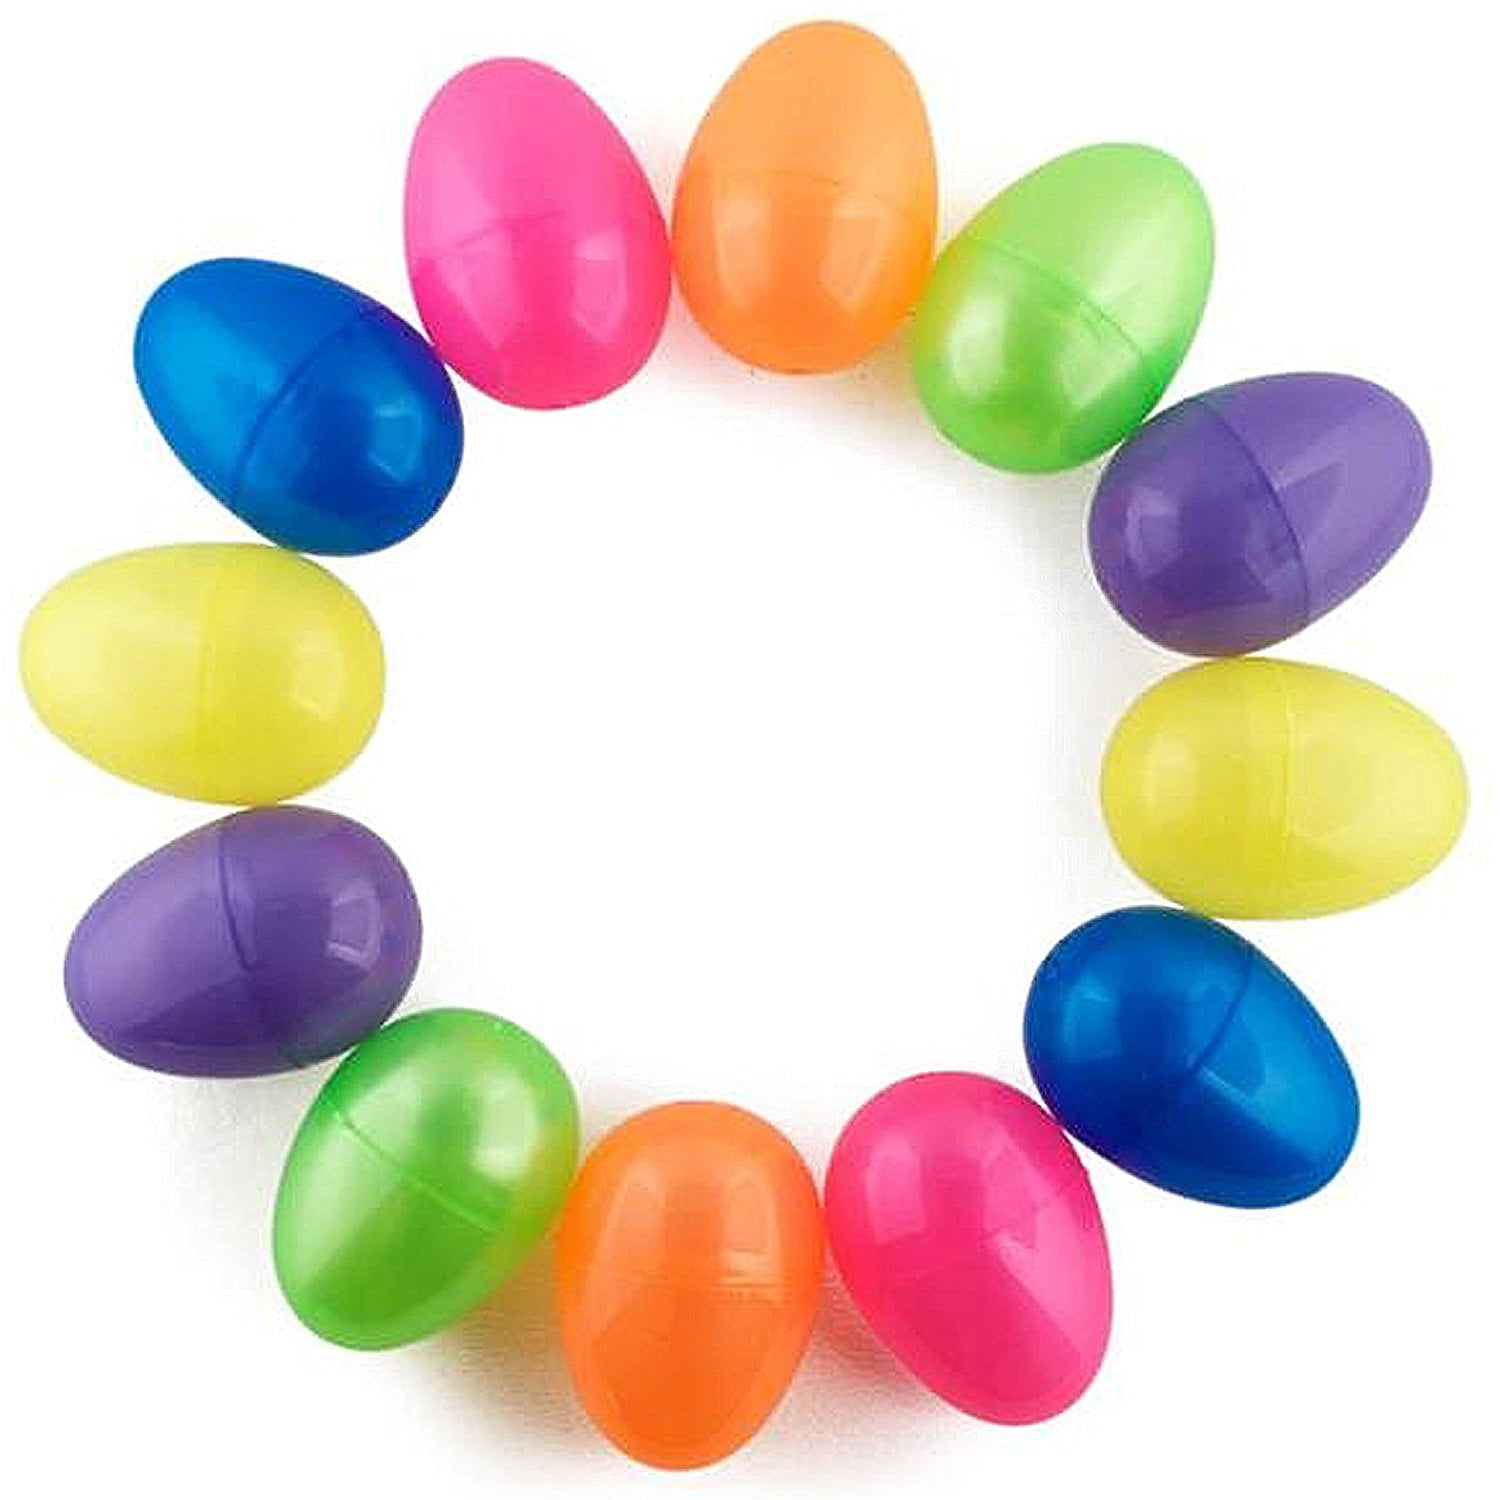 Details about   Flower Plastic Easter Eggs 12 Pieces Party Supplies 